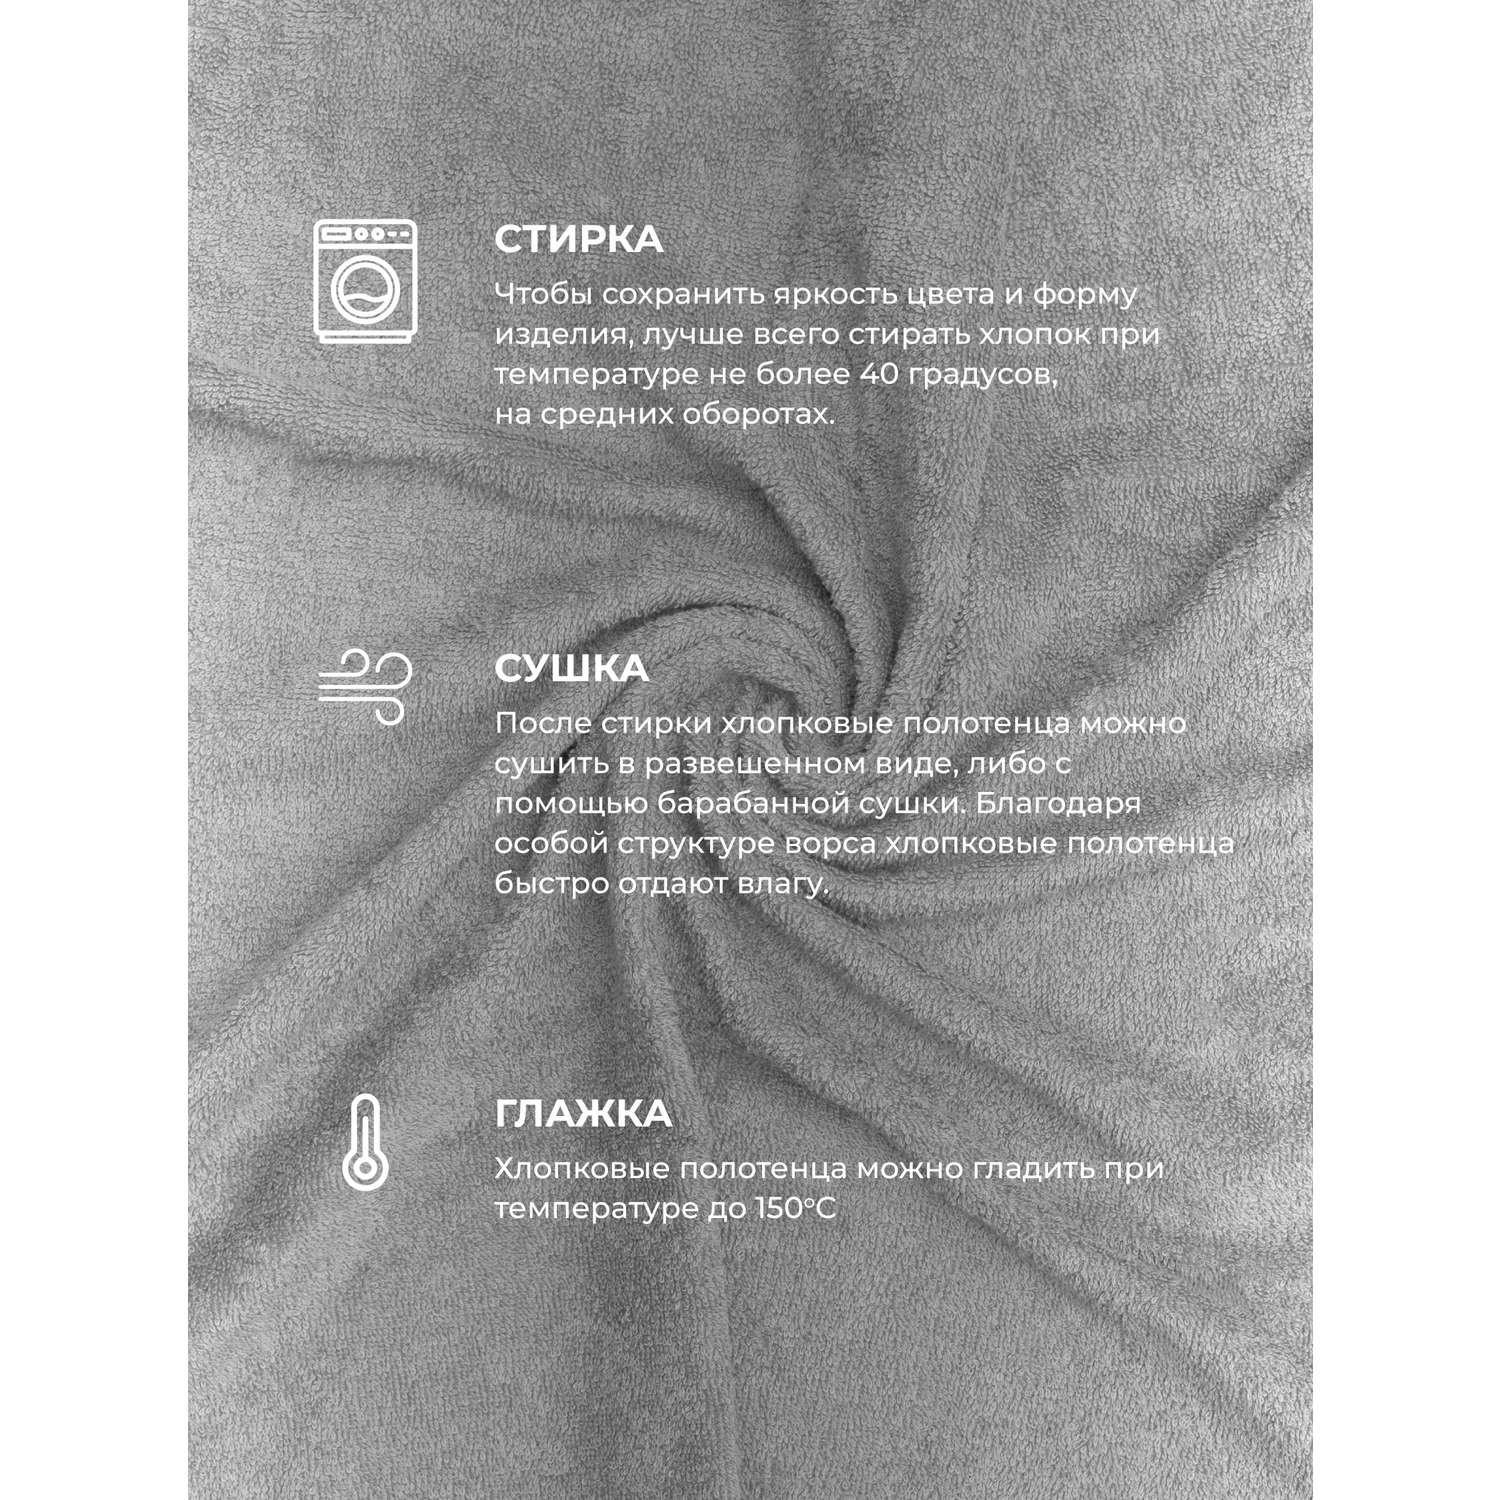 Набор махровых полотенец Unifico Nature светло-серый набор из 3 шт.:30х60-1и 50х80-1и70х130-1 - фото 10